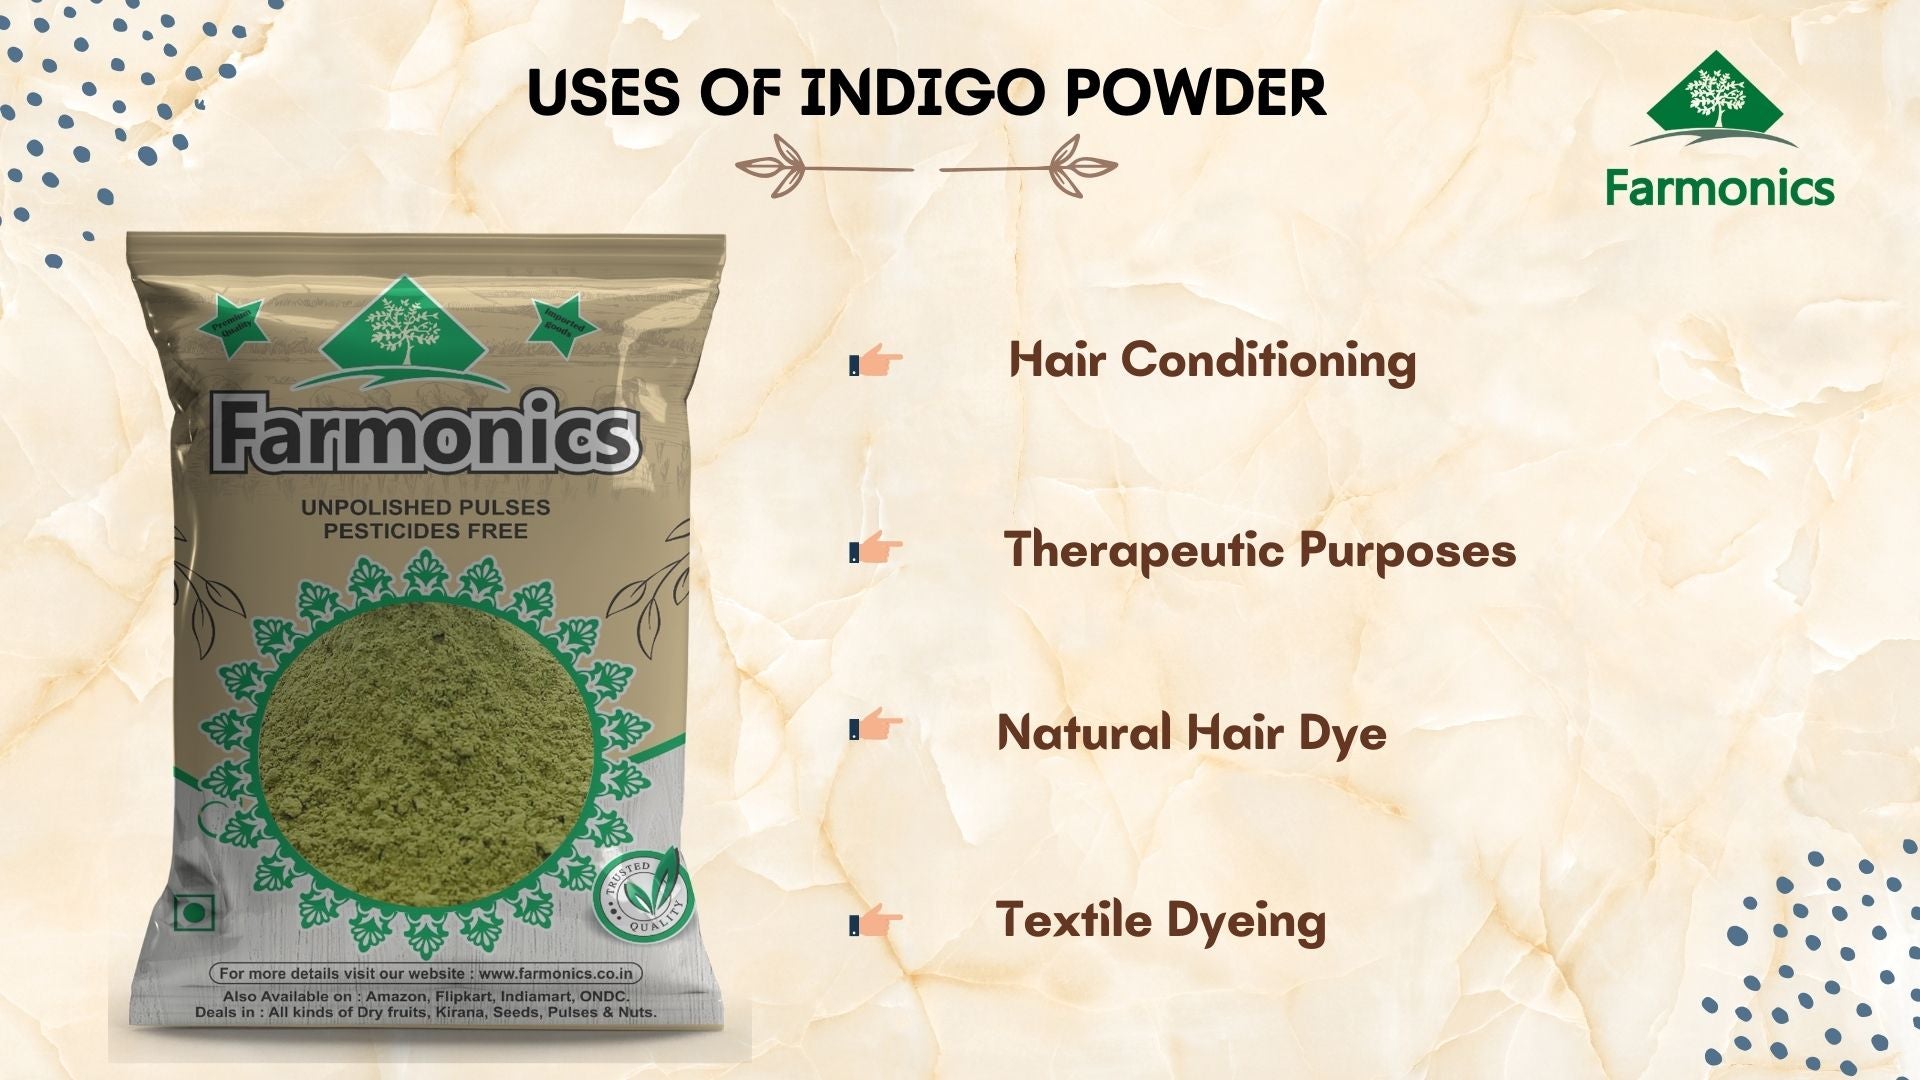 here are some of the uses of farmonics best qulity indigo powder